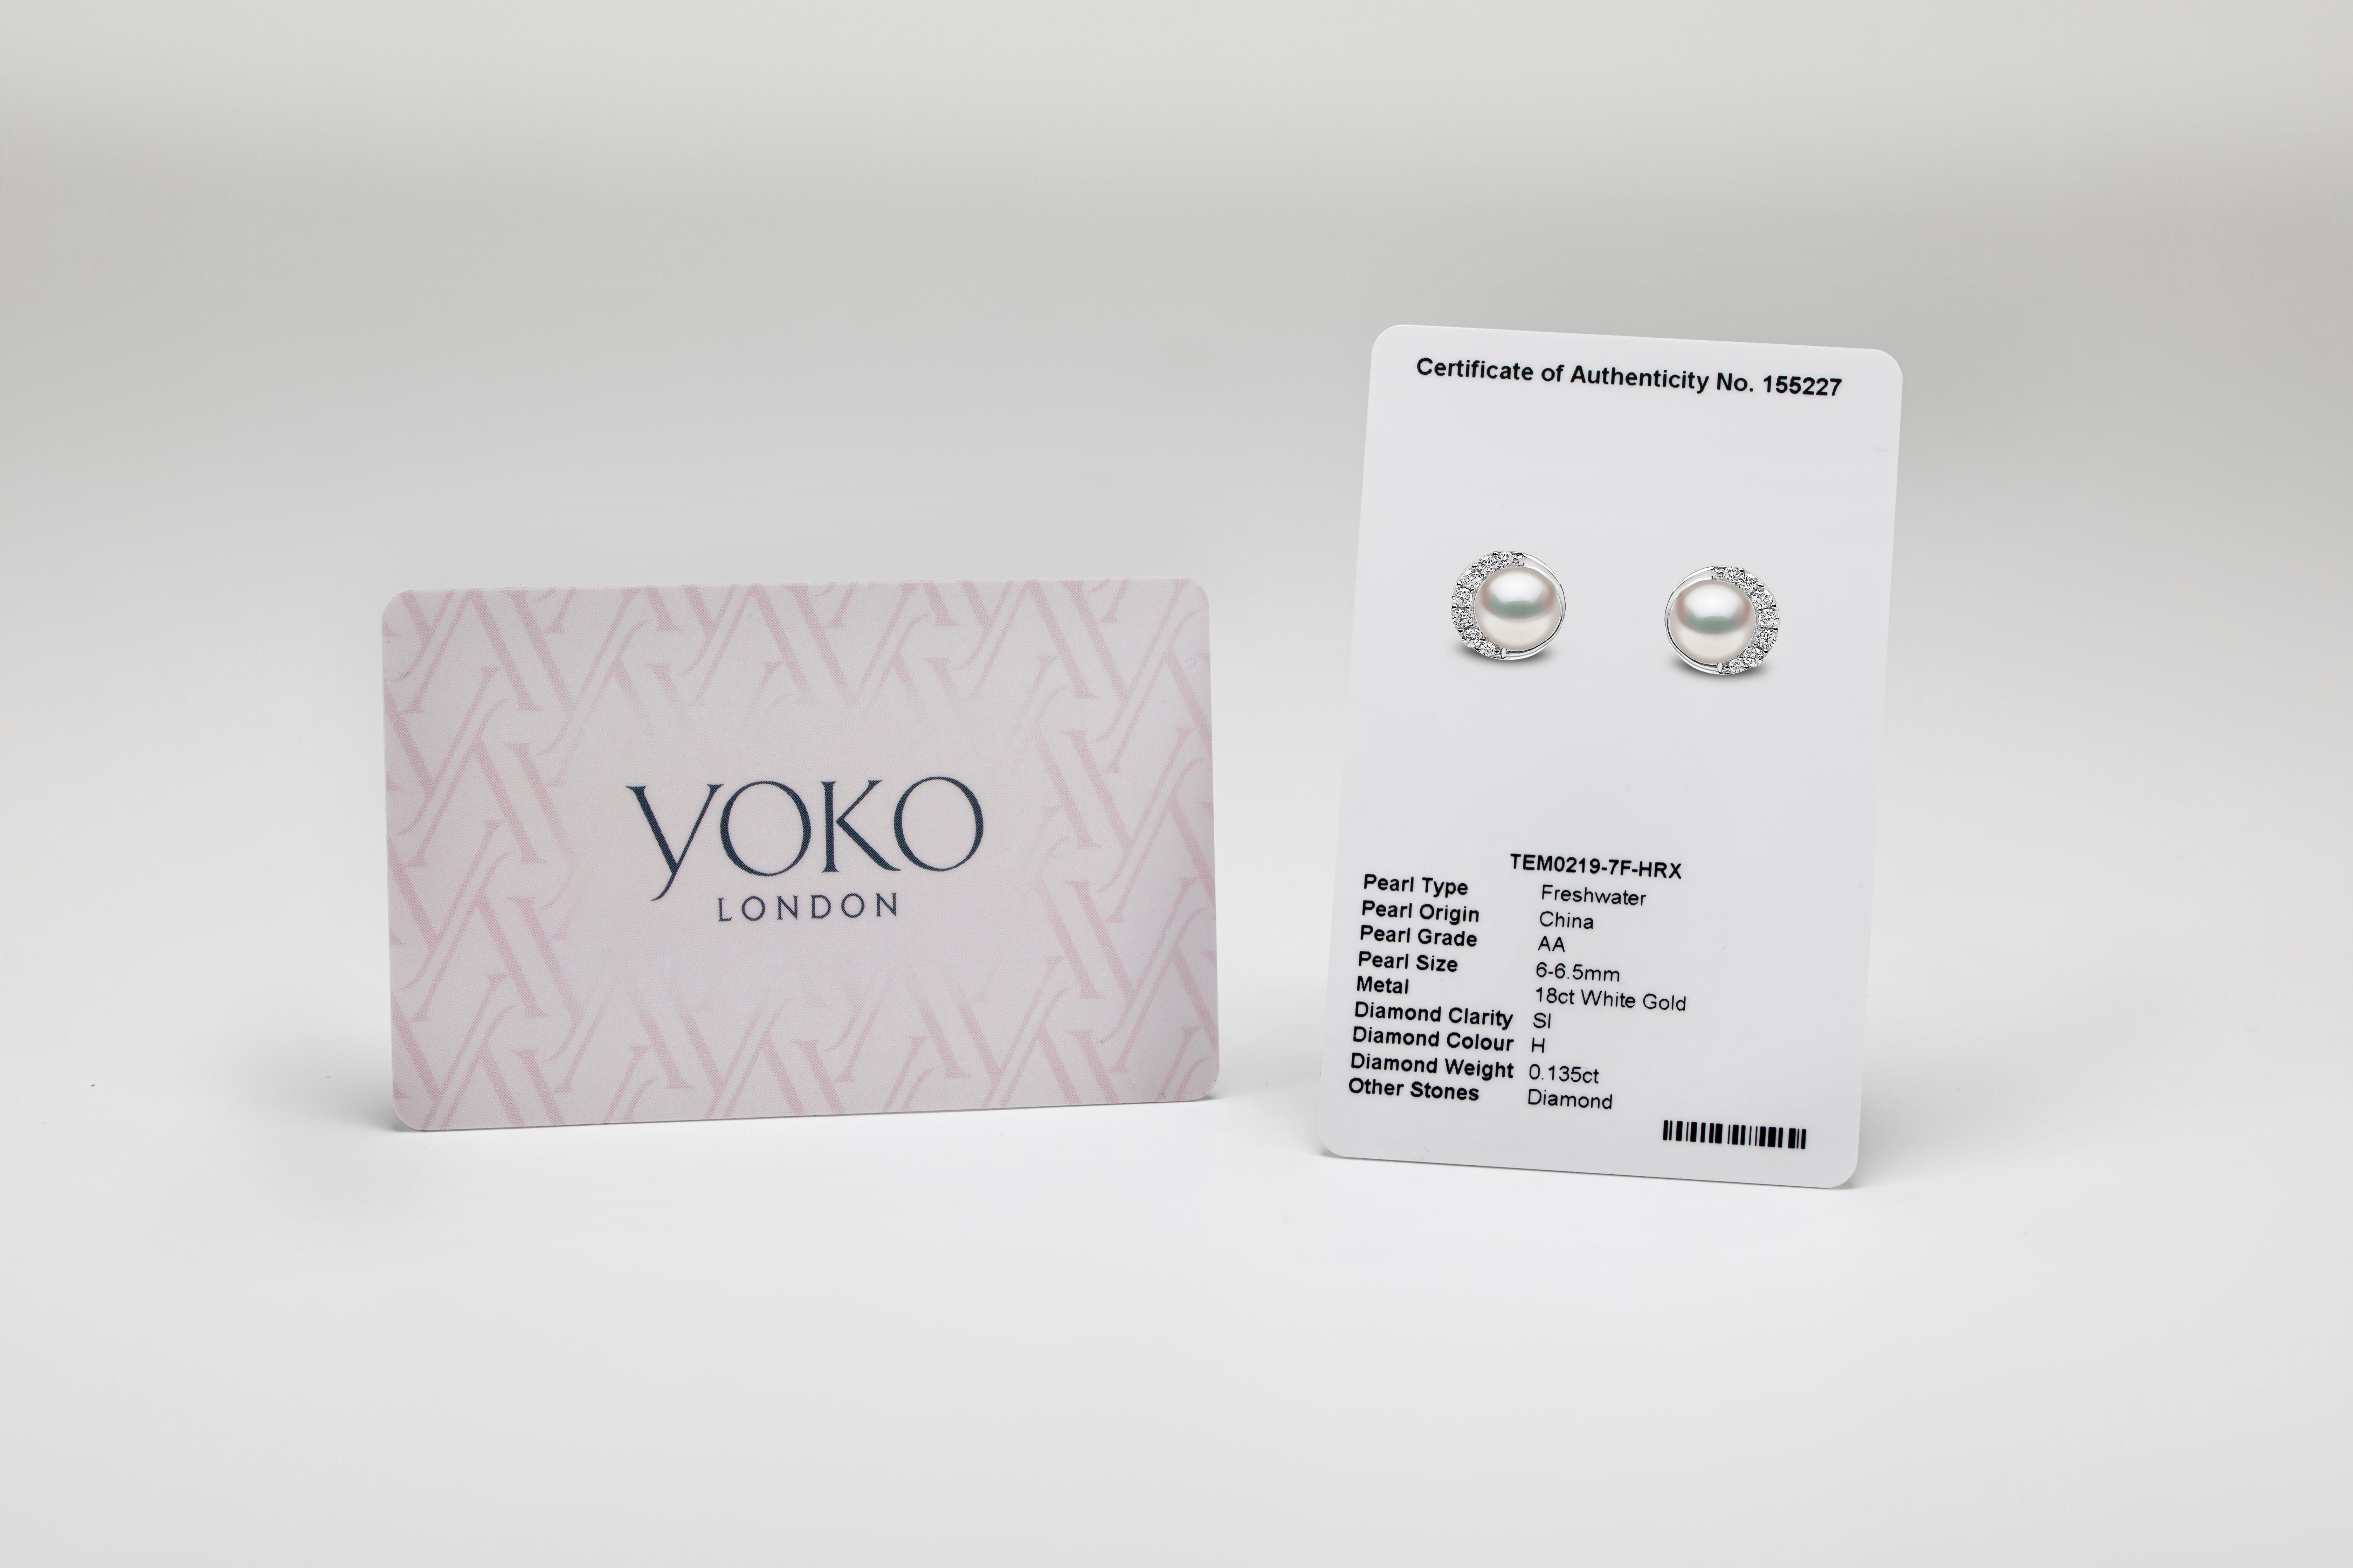 Yoko London Grey Tahitian Pearl, Tsavorite Garnet and Diamond 18K Gold Earrings For Sale 1